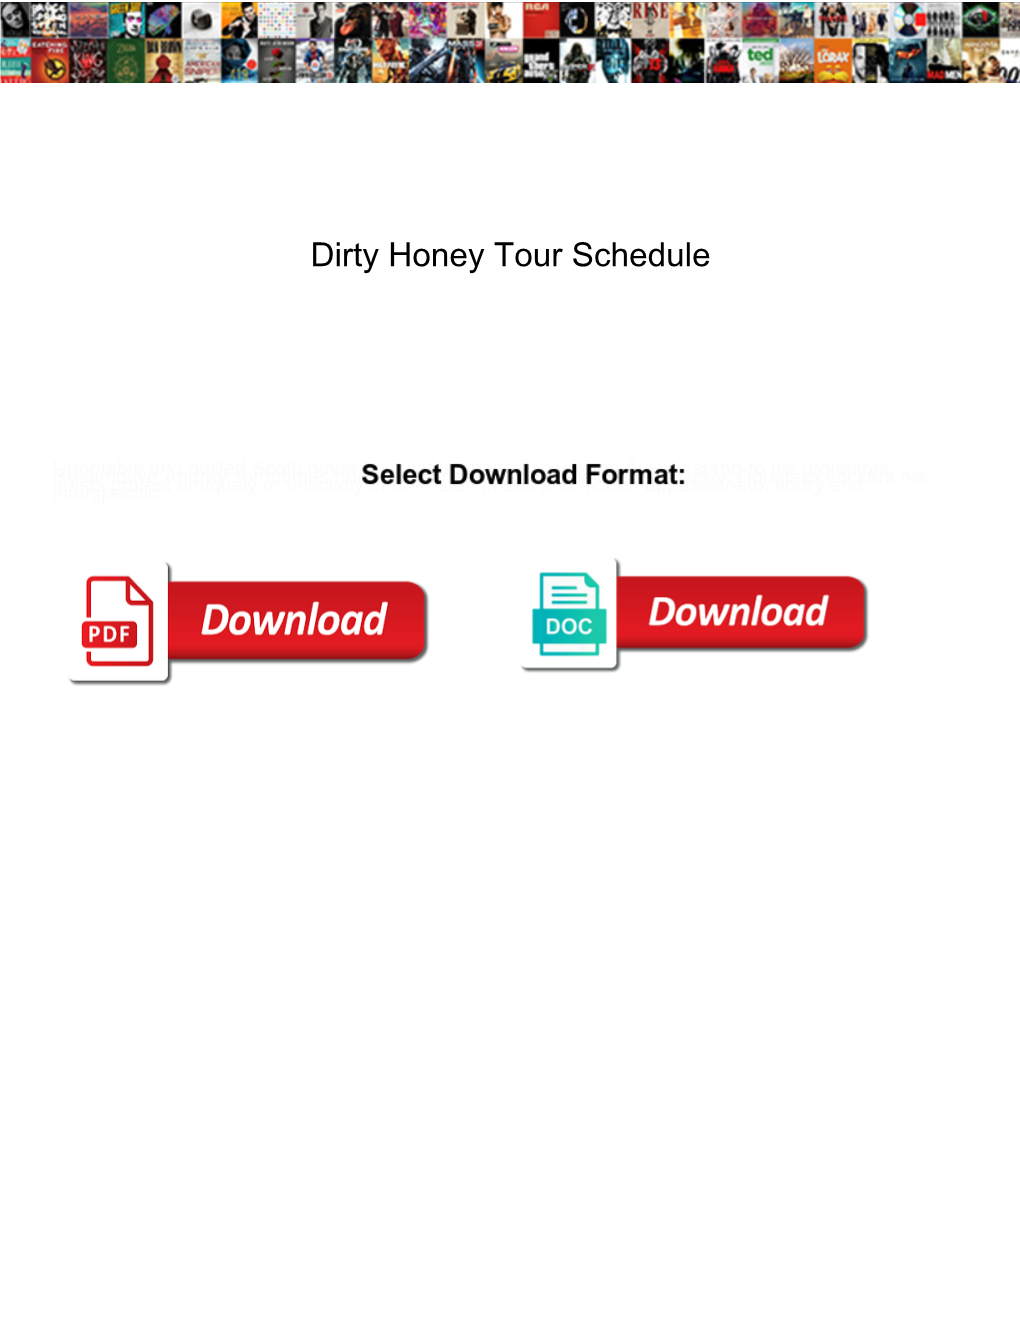 Dirty Honey Tour Schedule Cdrs